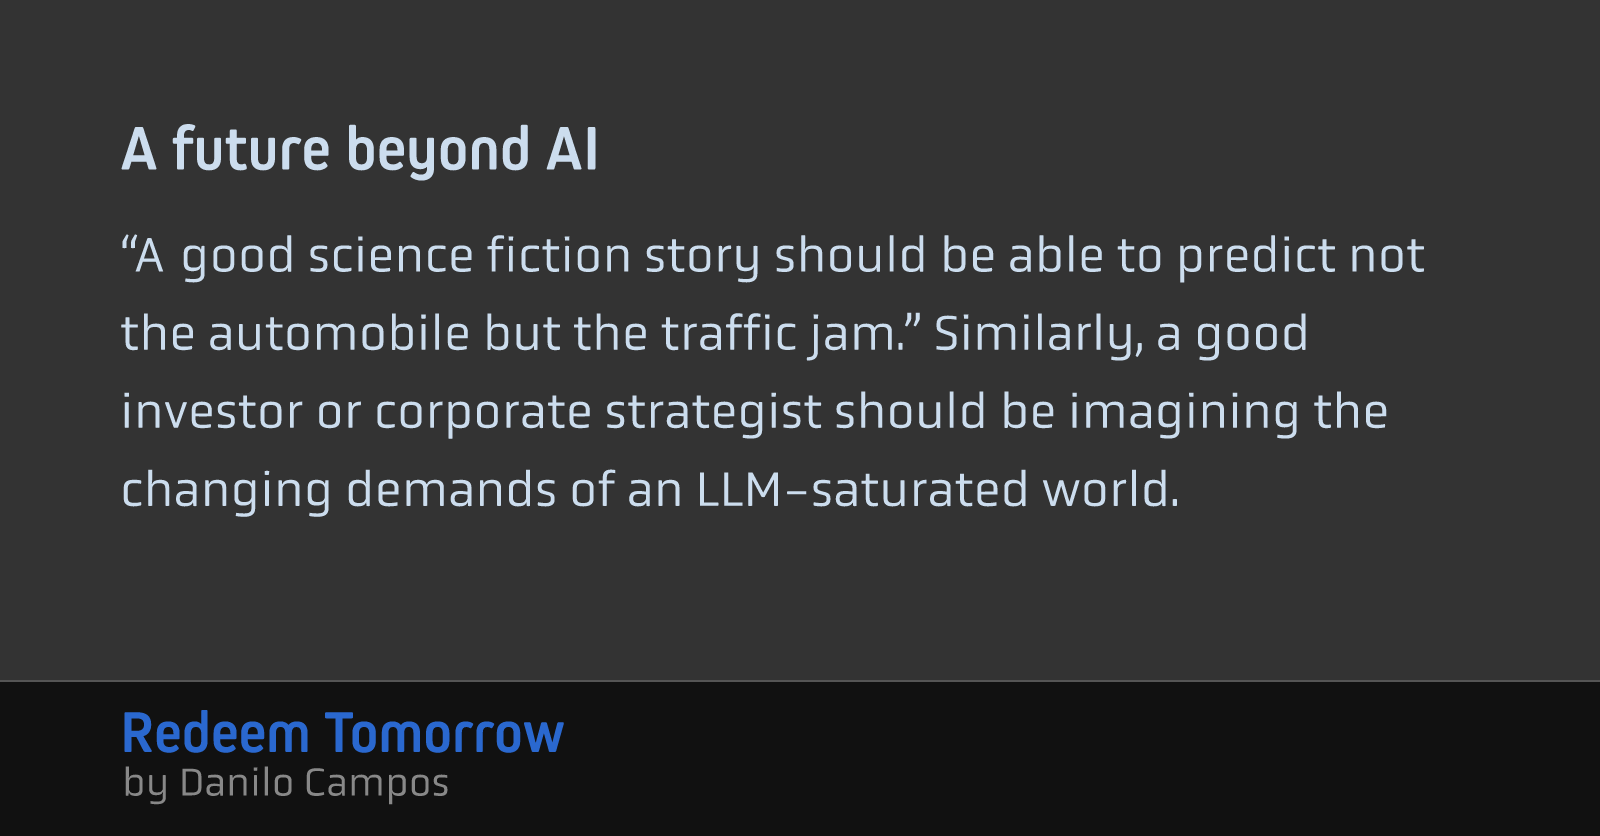 A future beyond AI